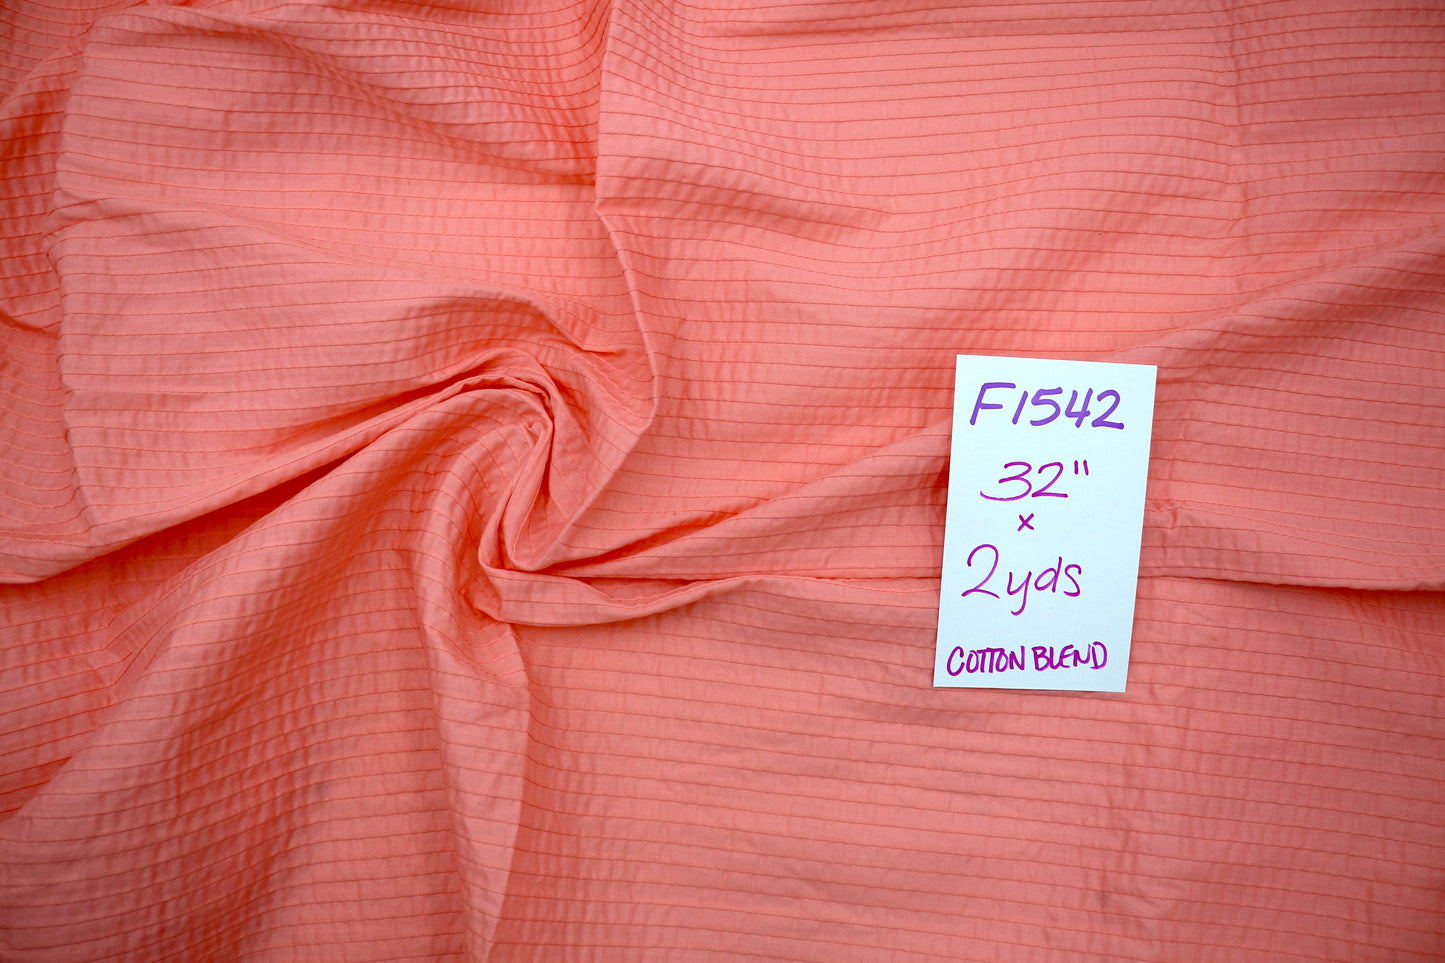 Peachy Dreams Cotton Blend Fabric 32" x 2 yds